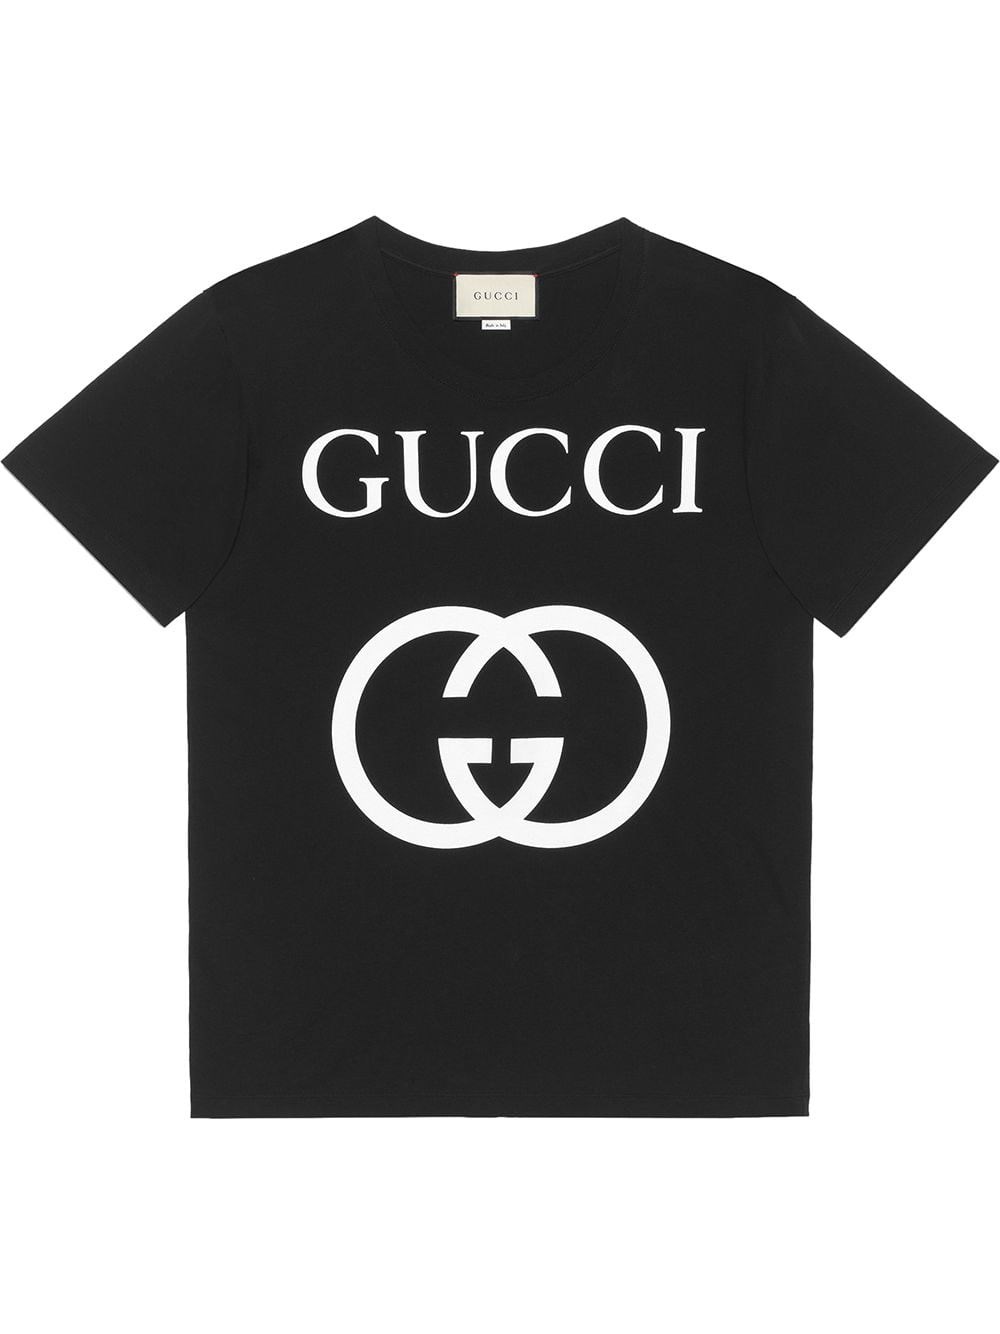 gucci shirt with logo